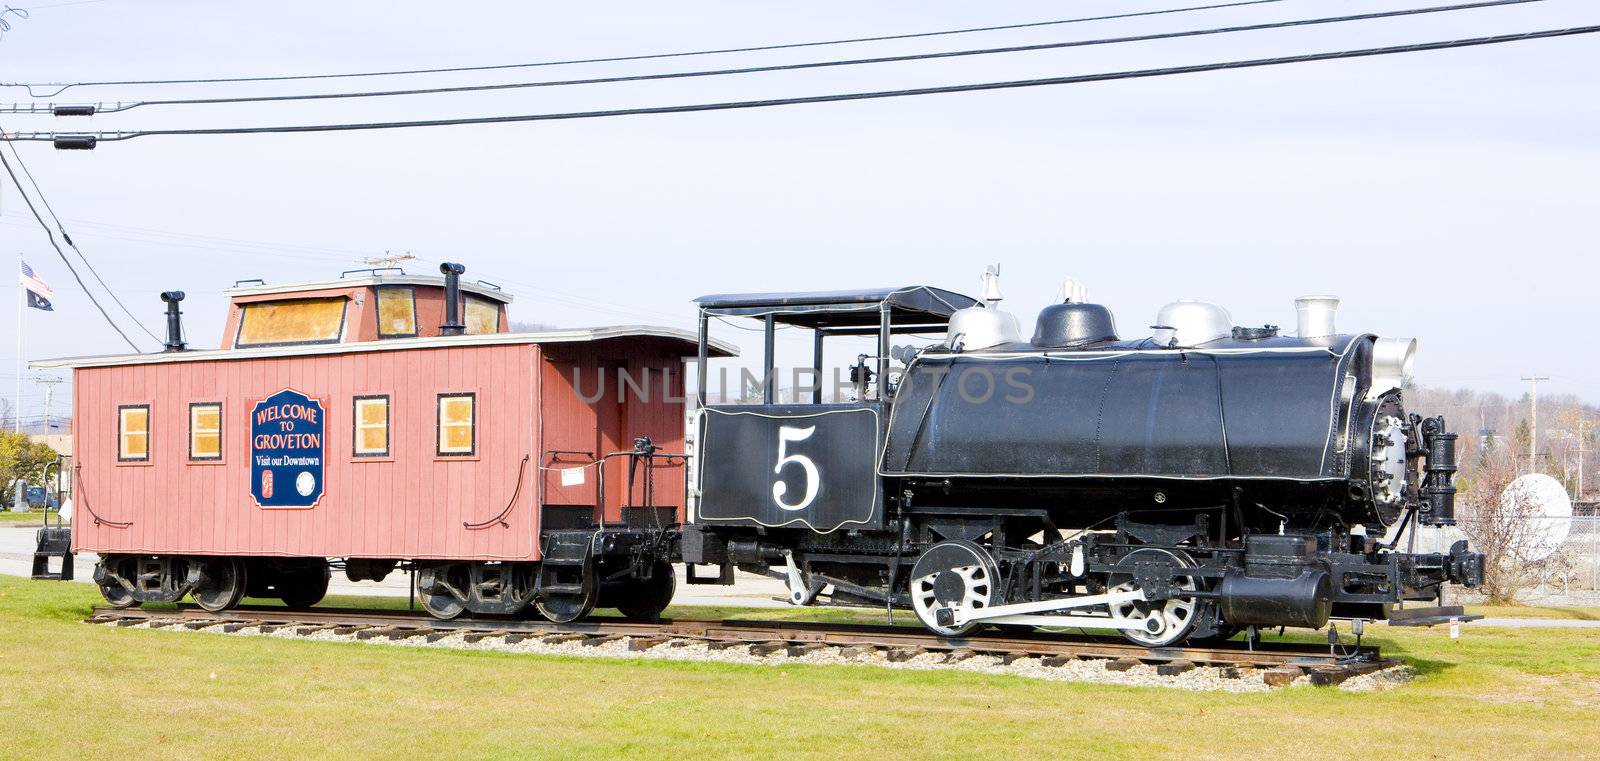 steam locomotive, Groveton, New Hampshire, USA by phbcz